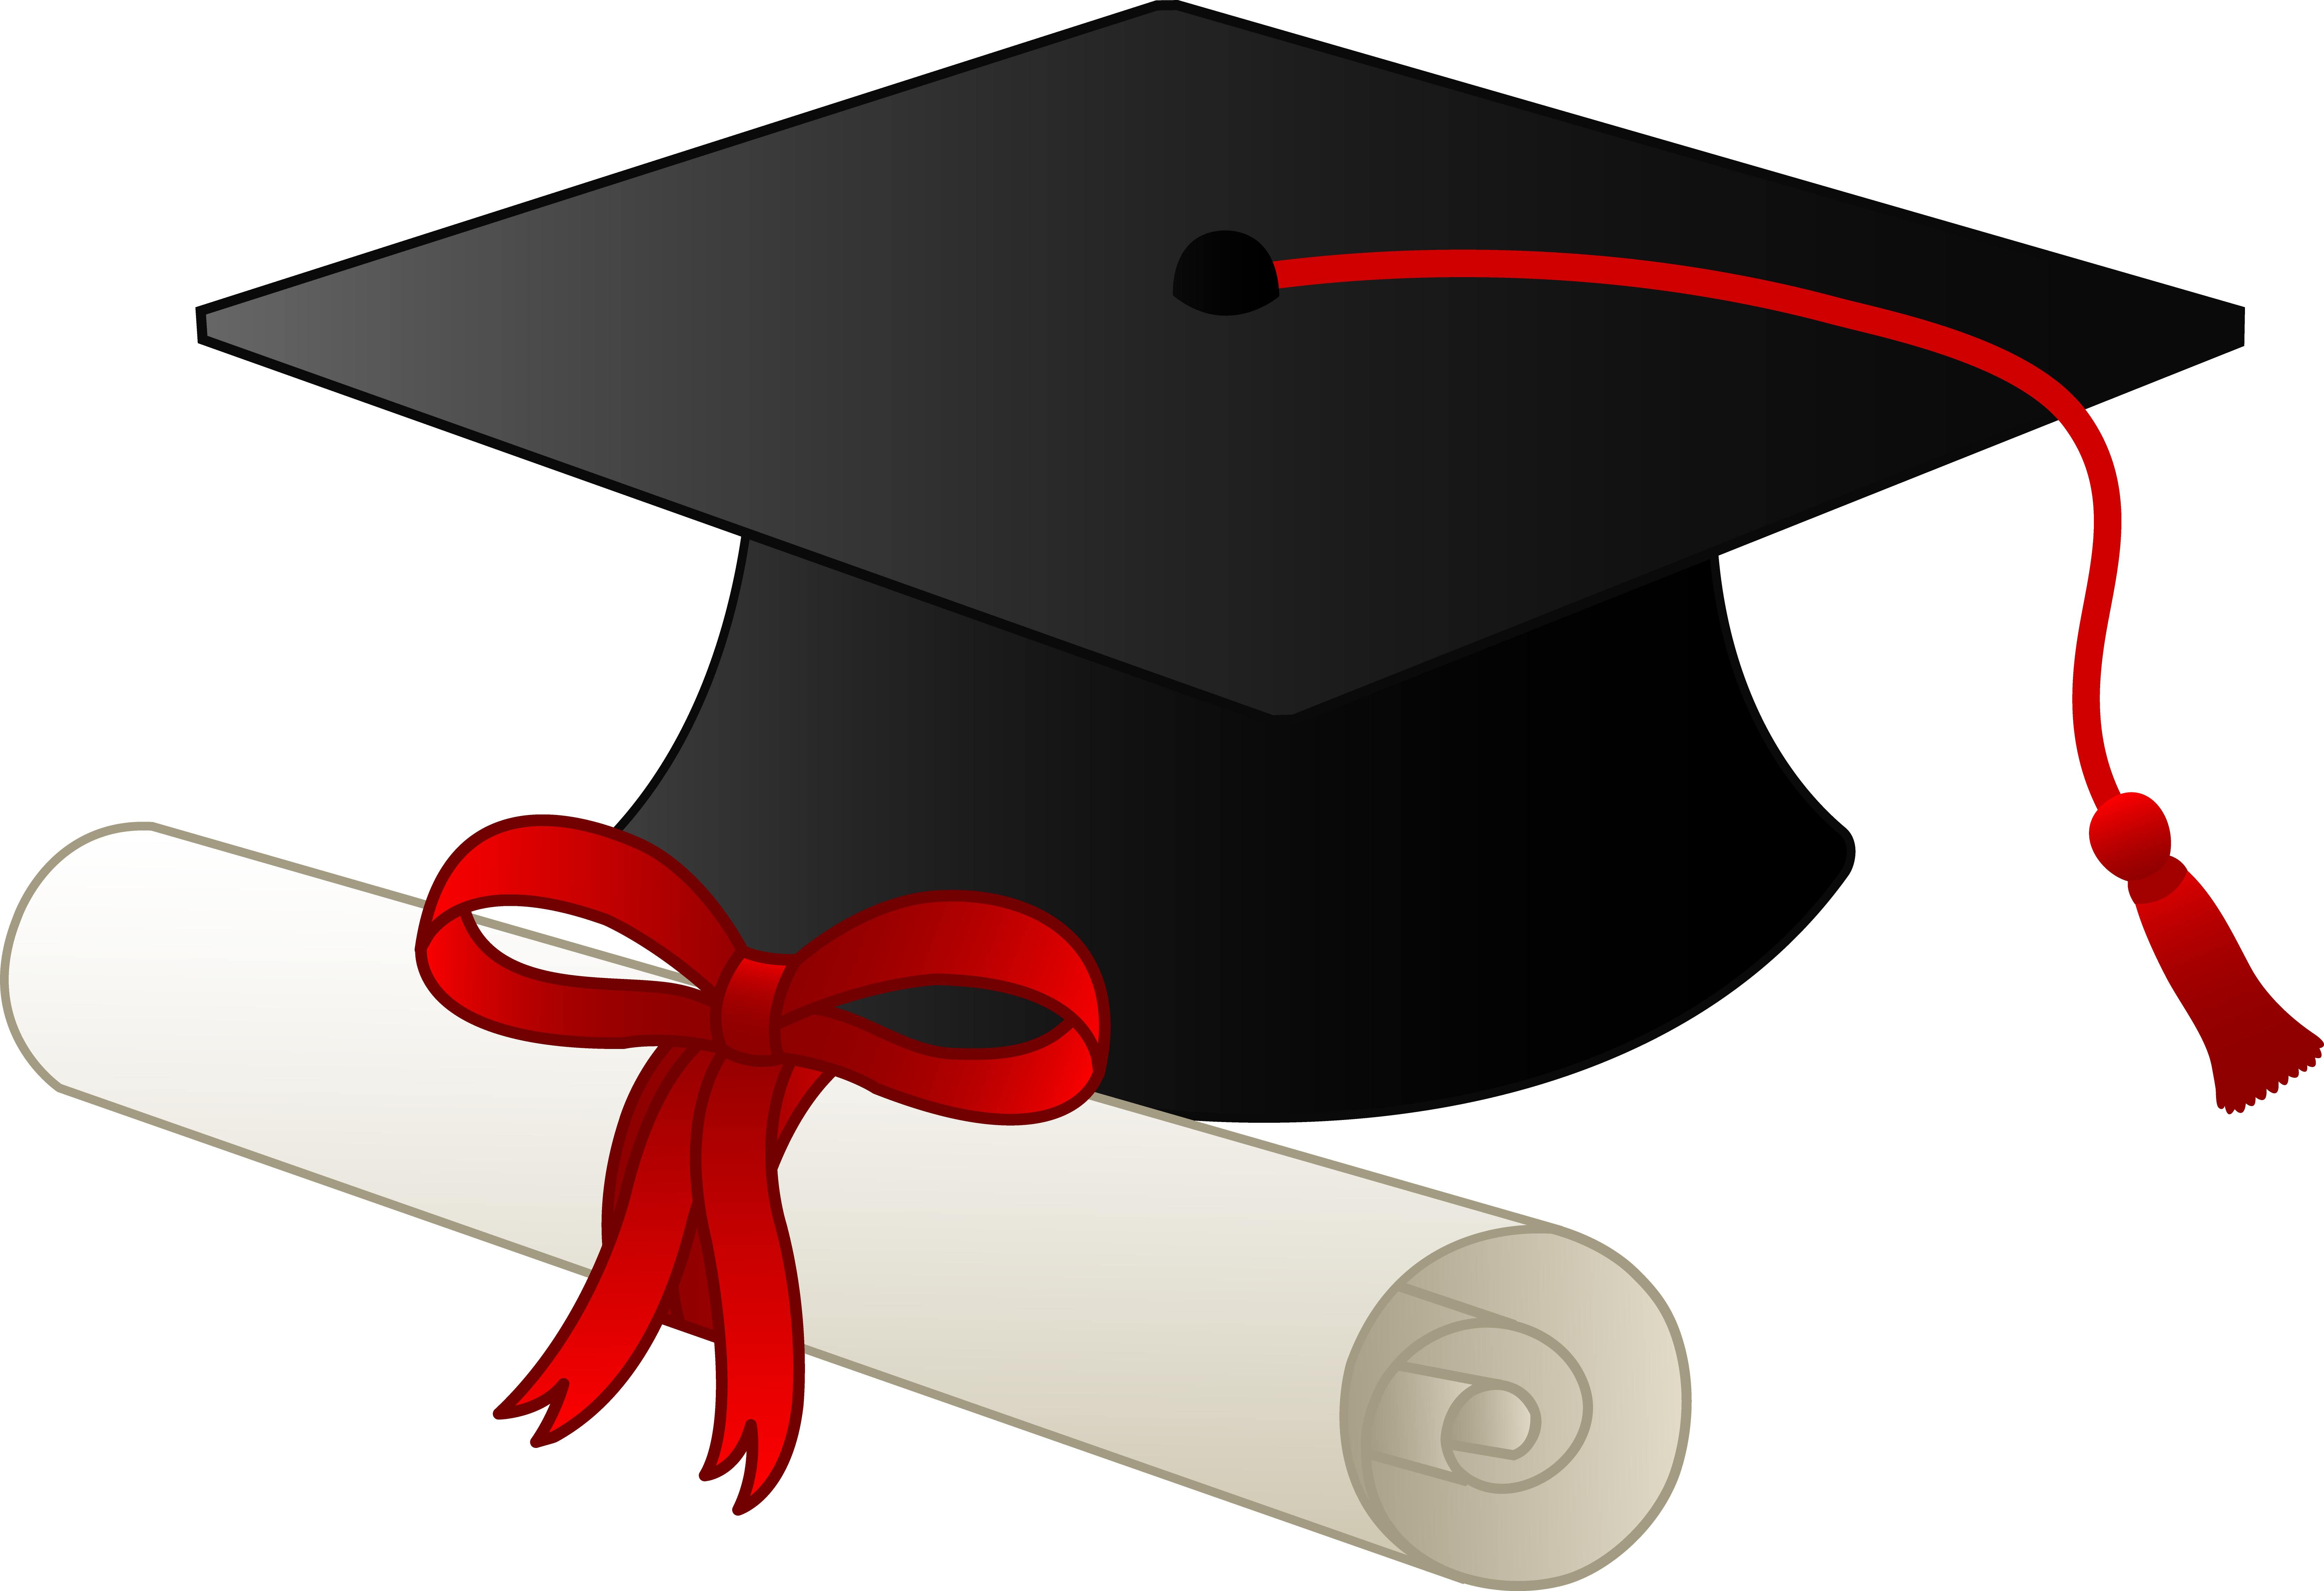 Free clipart graduation cap and diploma